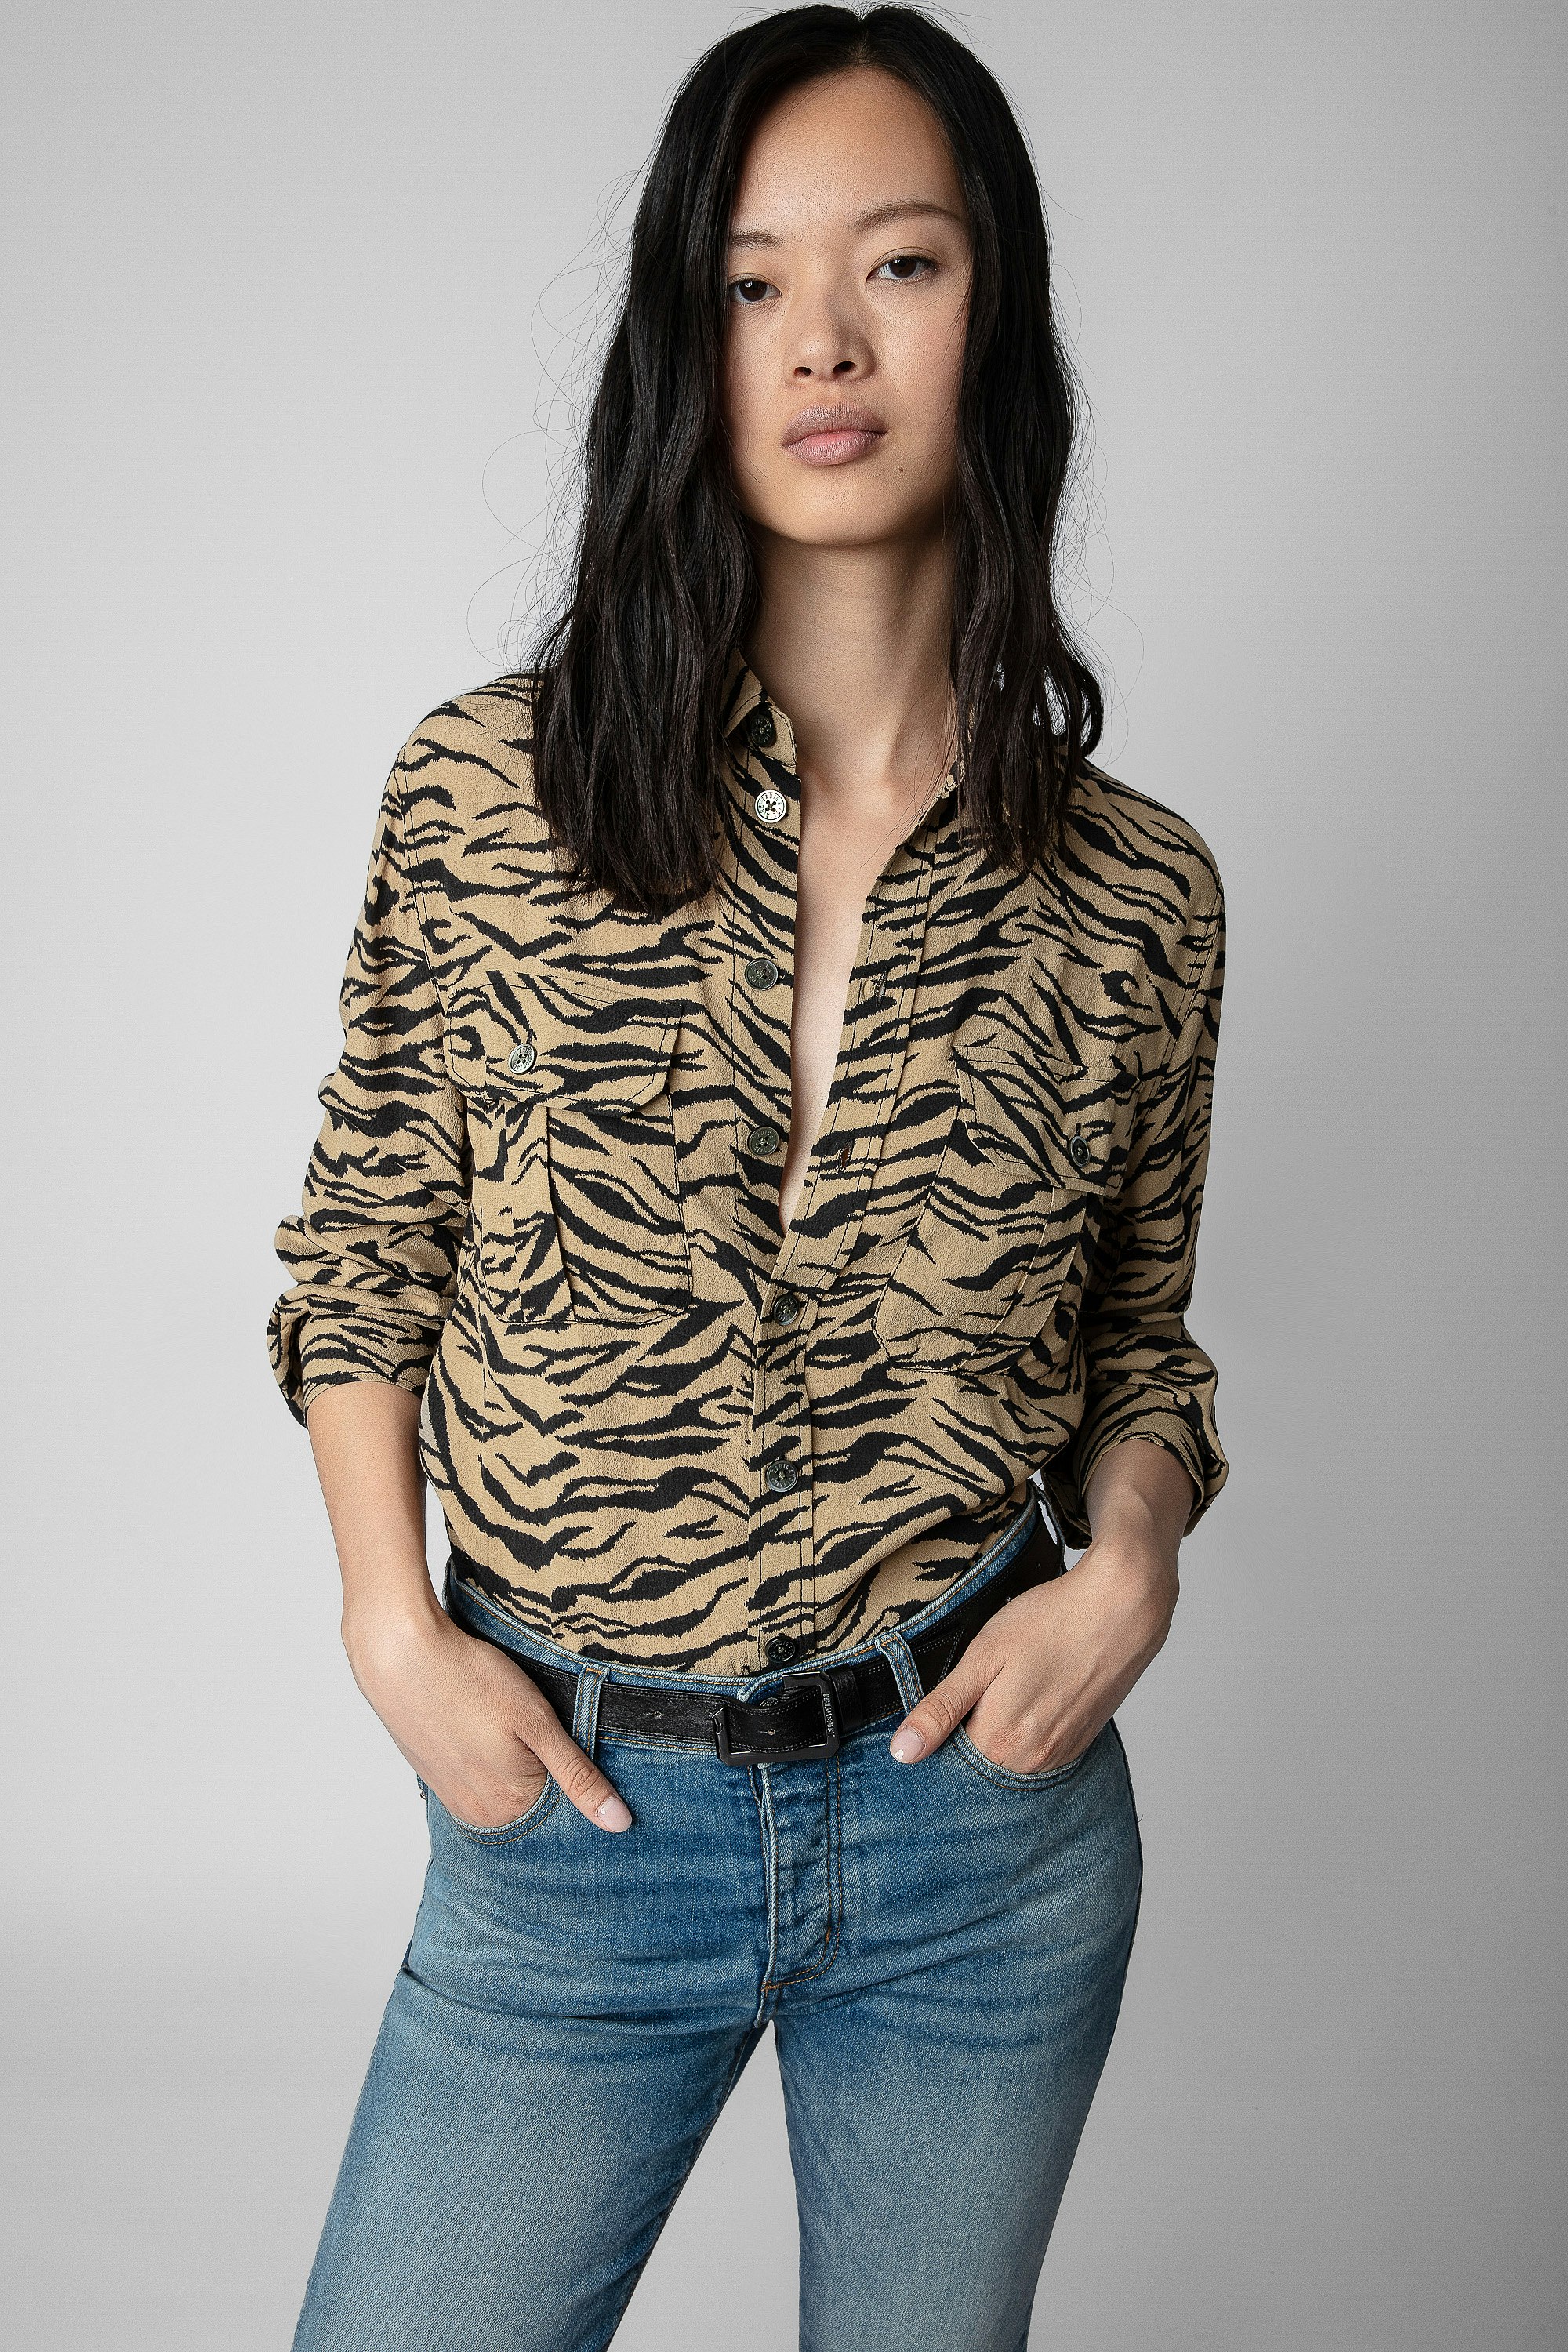 Teros Tiger Shirt - Women’s Naturel shirt with tiger print and button fastening